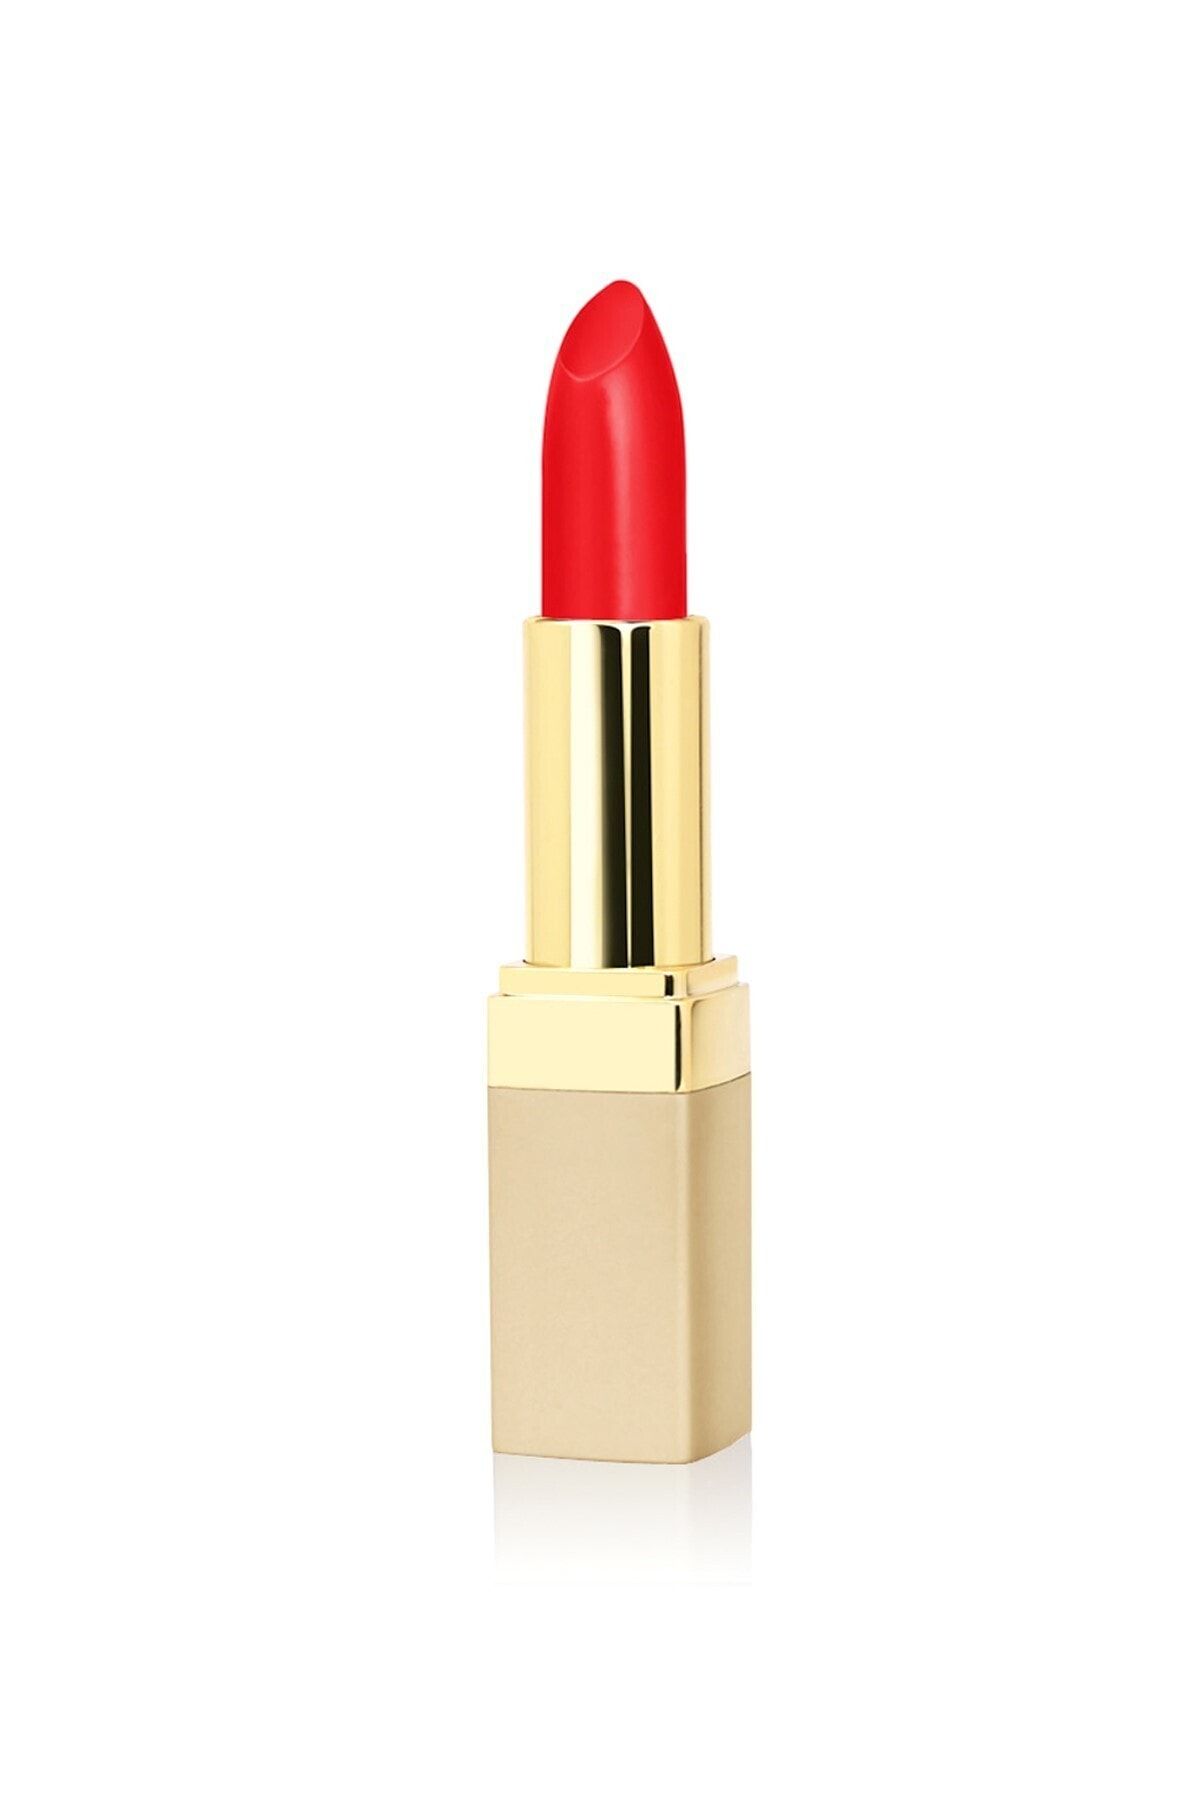 Golden Rose Ruj - Ultra Rich Color Lipstick No: 49 8691190000493